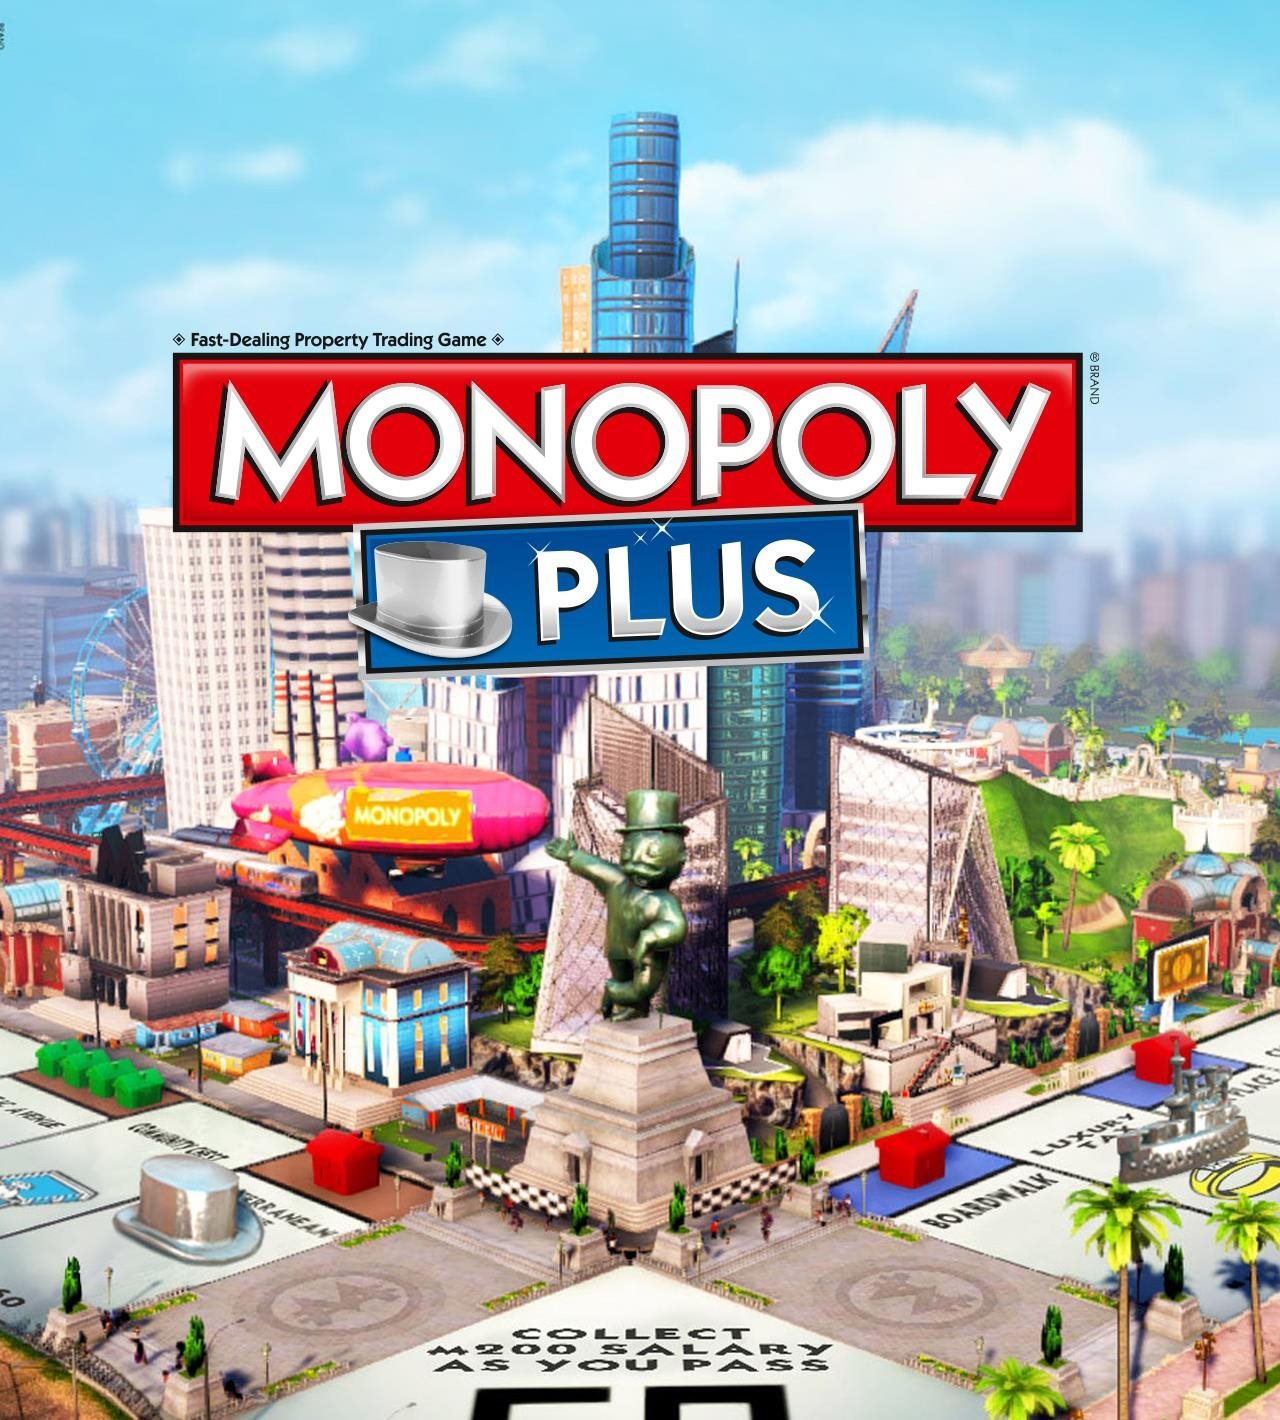 Monopoly Plus - PC DIGITAL